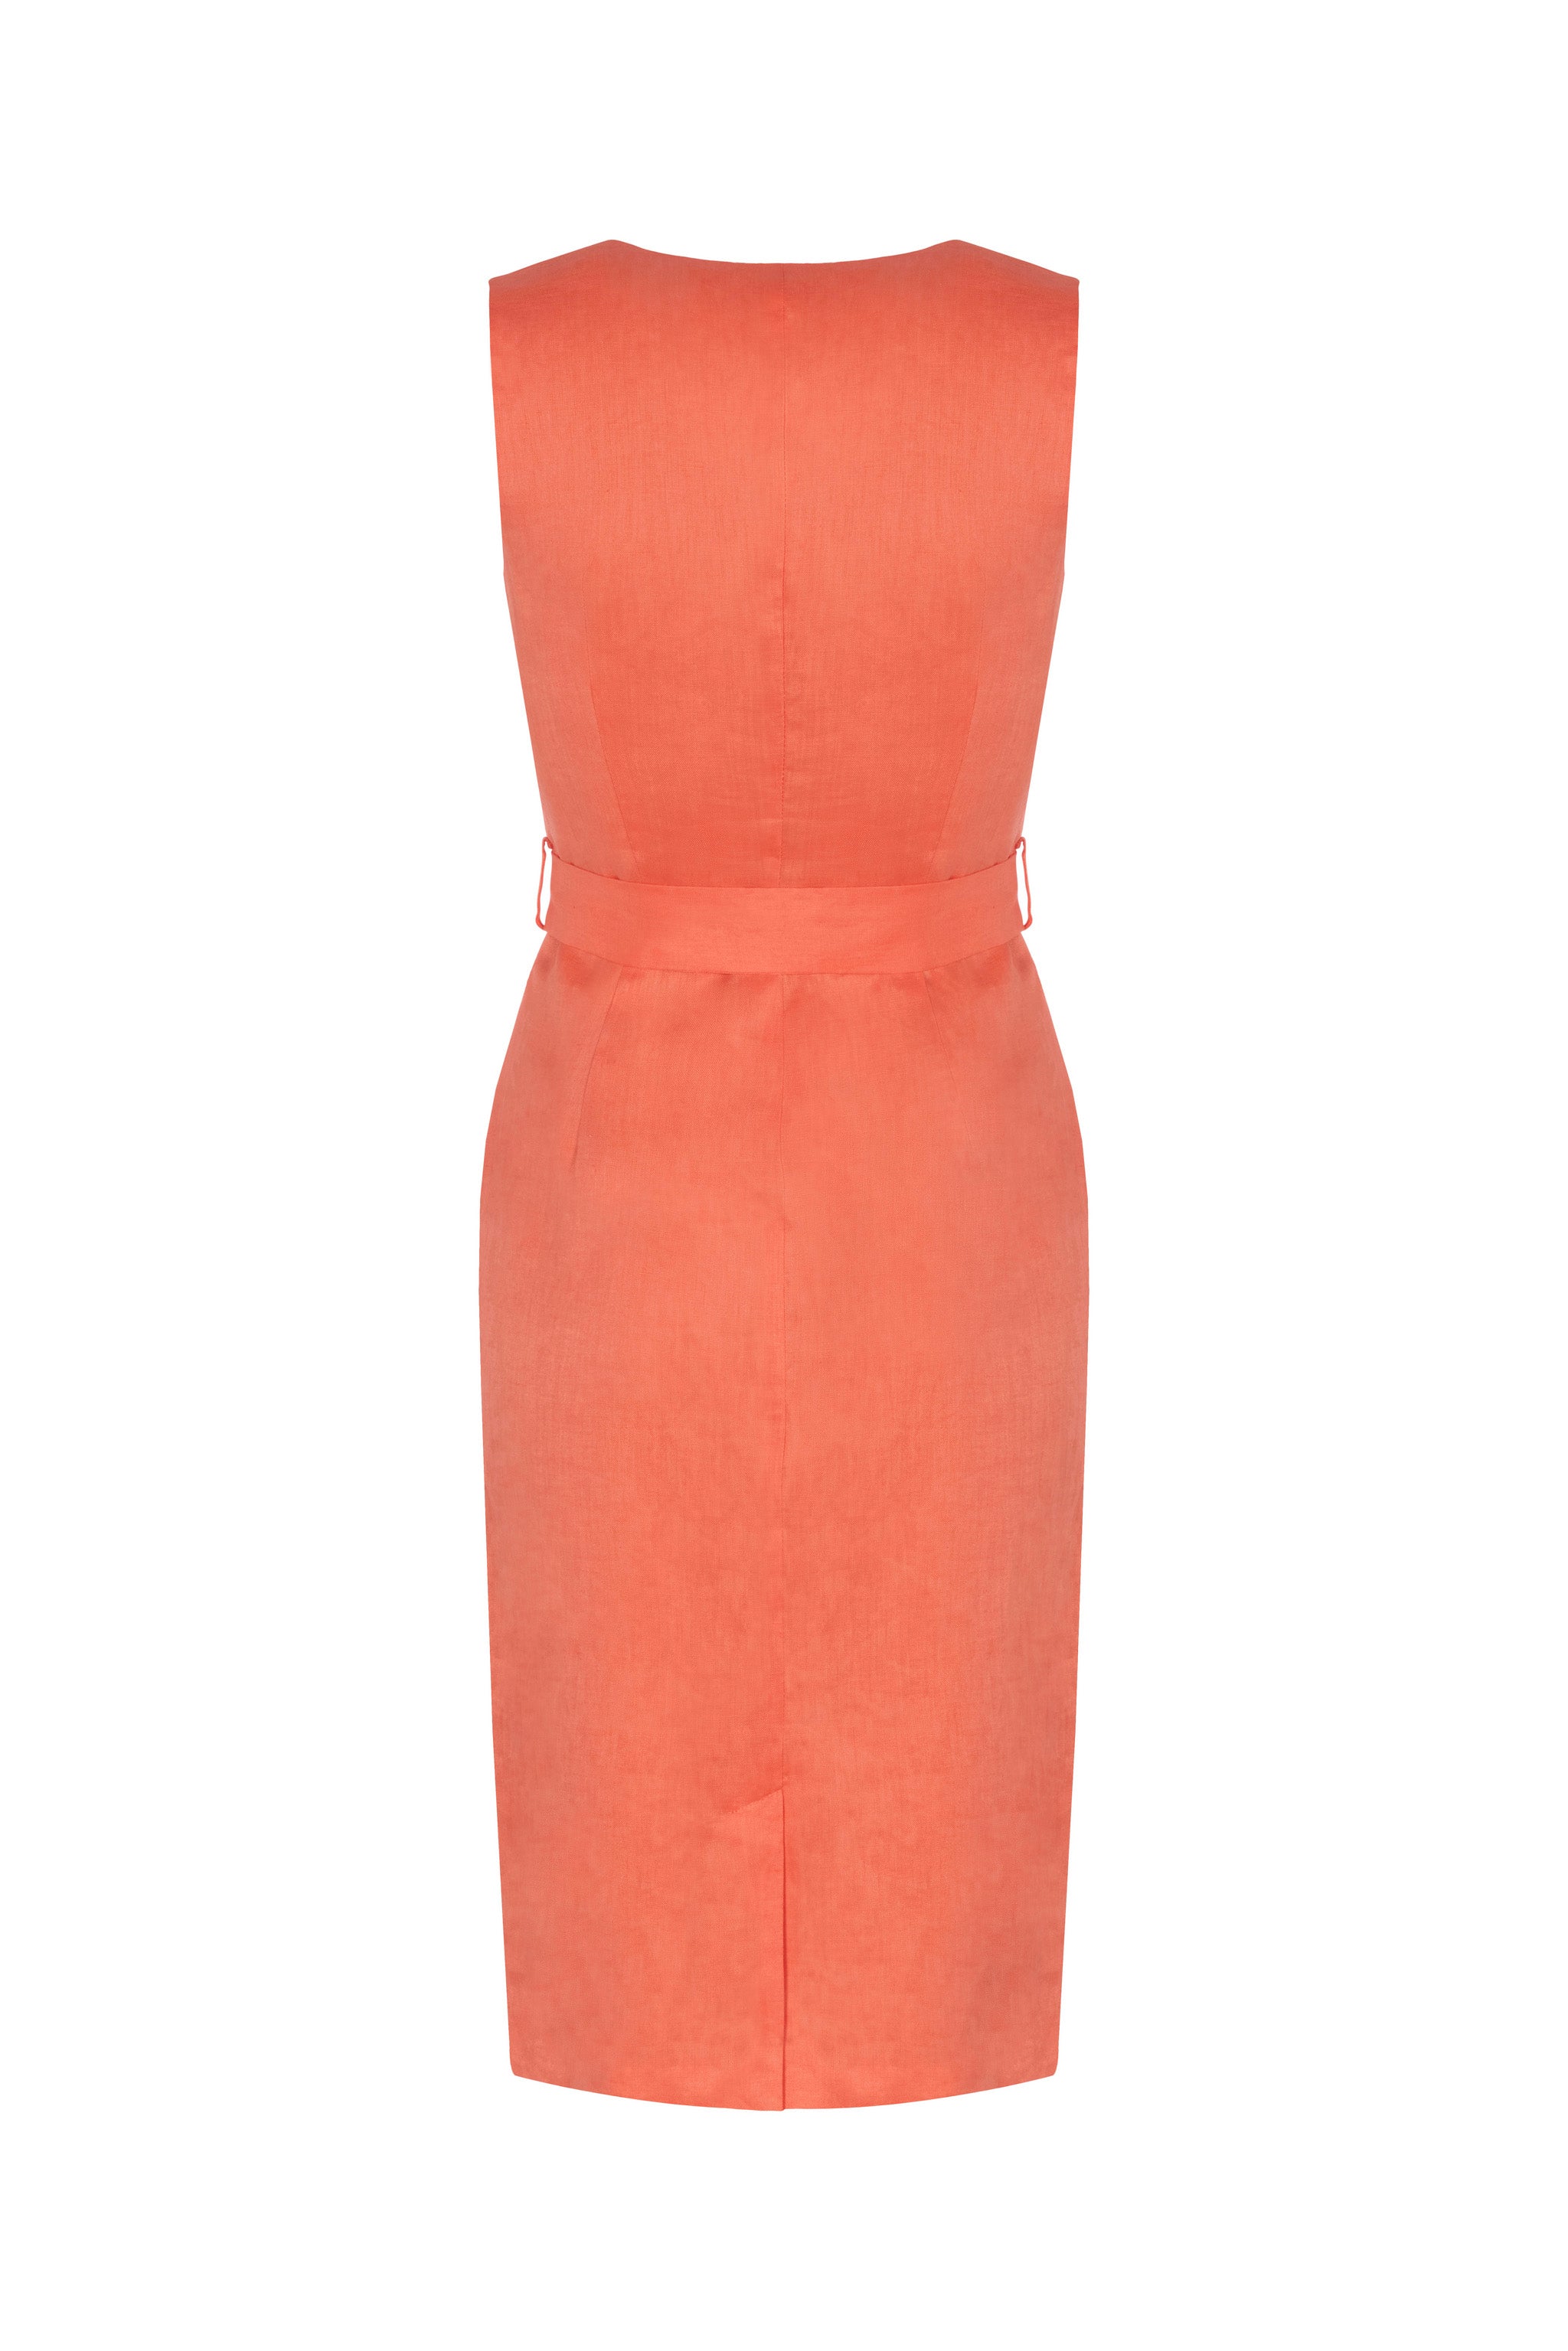 Linen Dress (Coral)